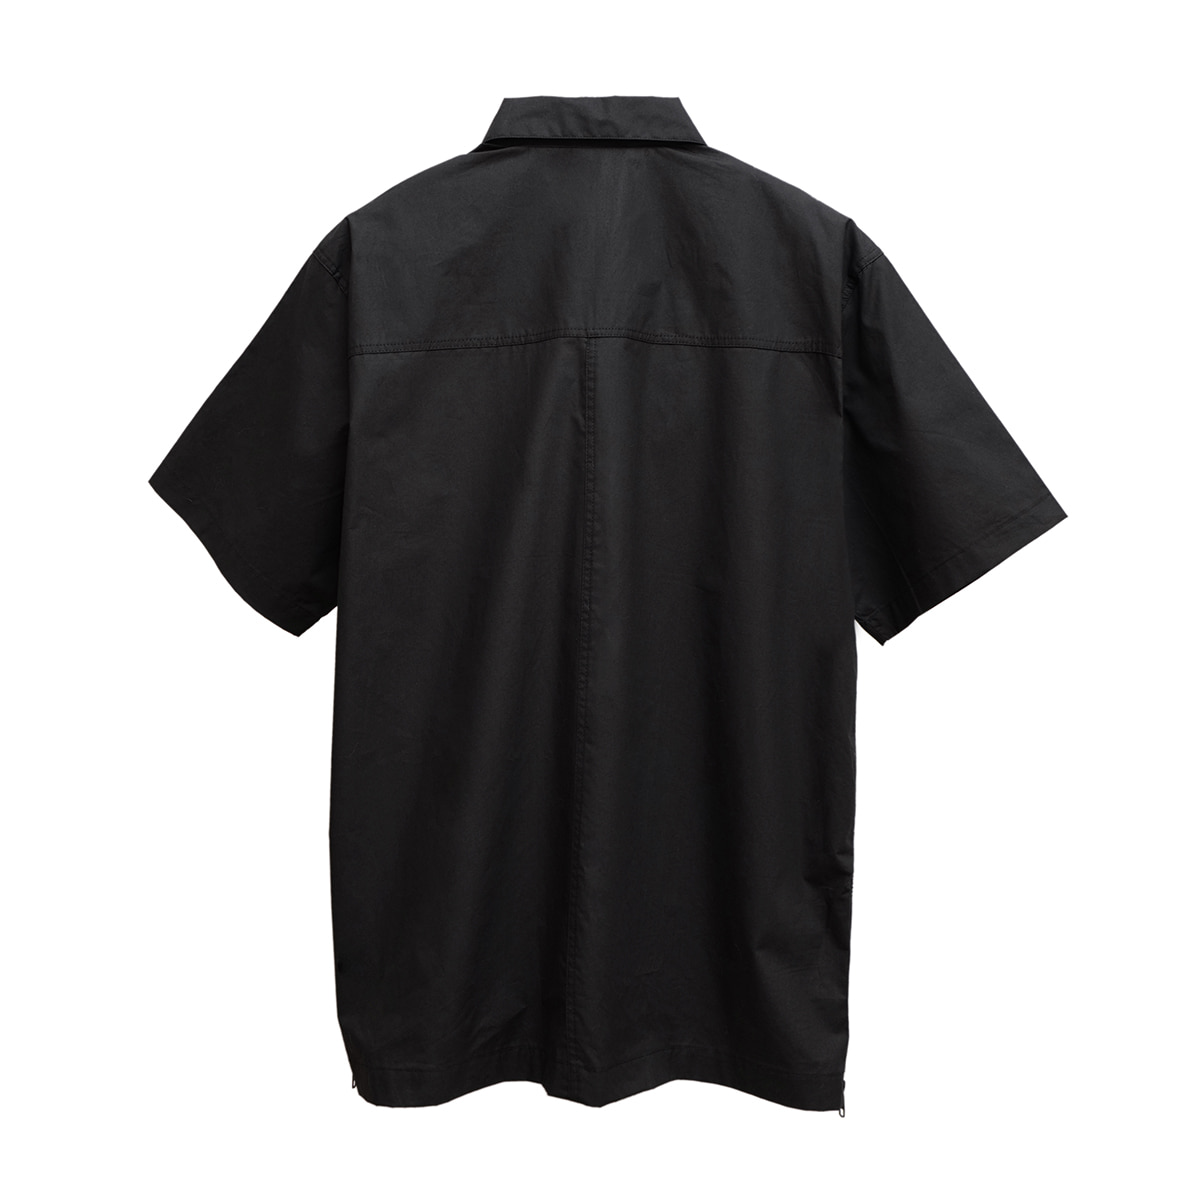 Gotha.2 Zip Shirt (black)